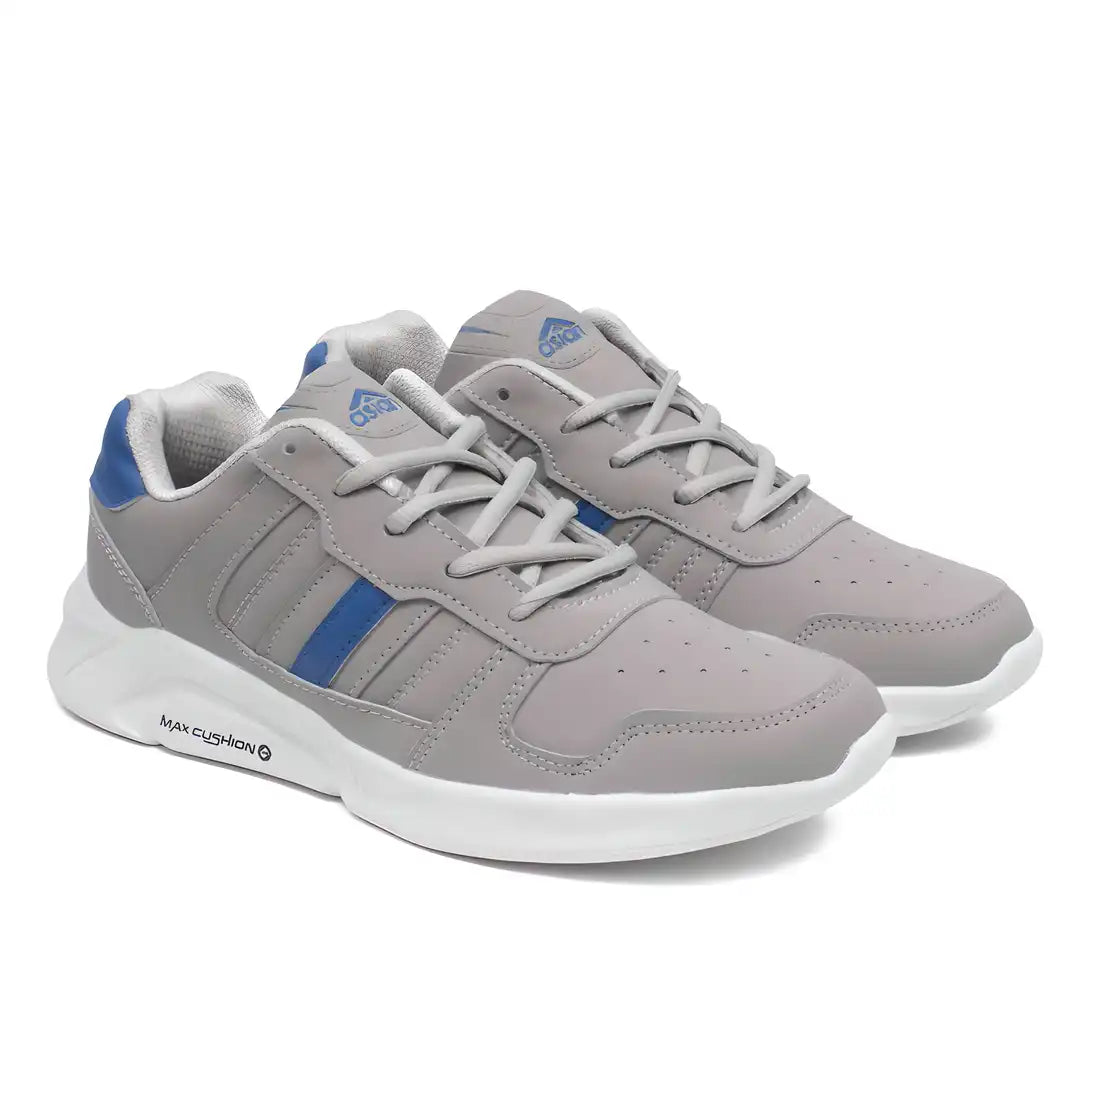 Asian Waterproof-03 Light Grey Sports Shoes